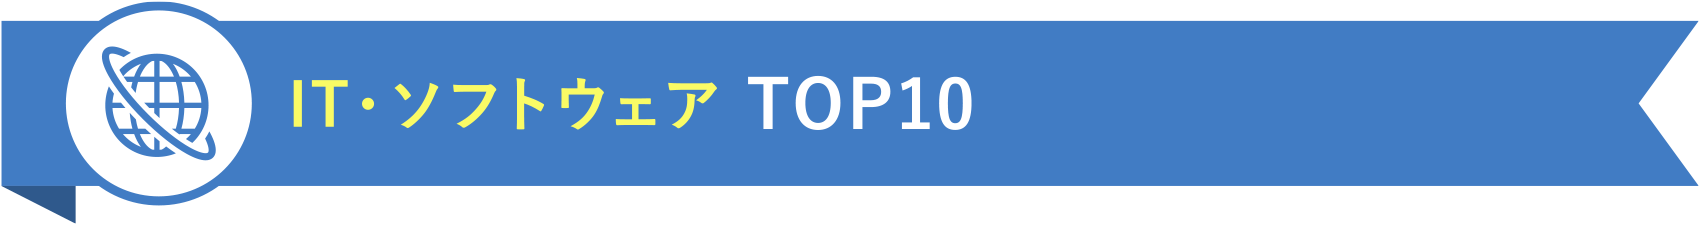 IT・ソフトウェア TOP10